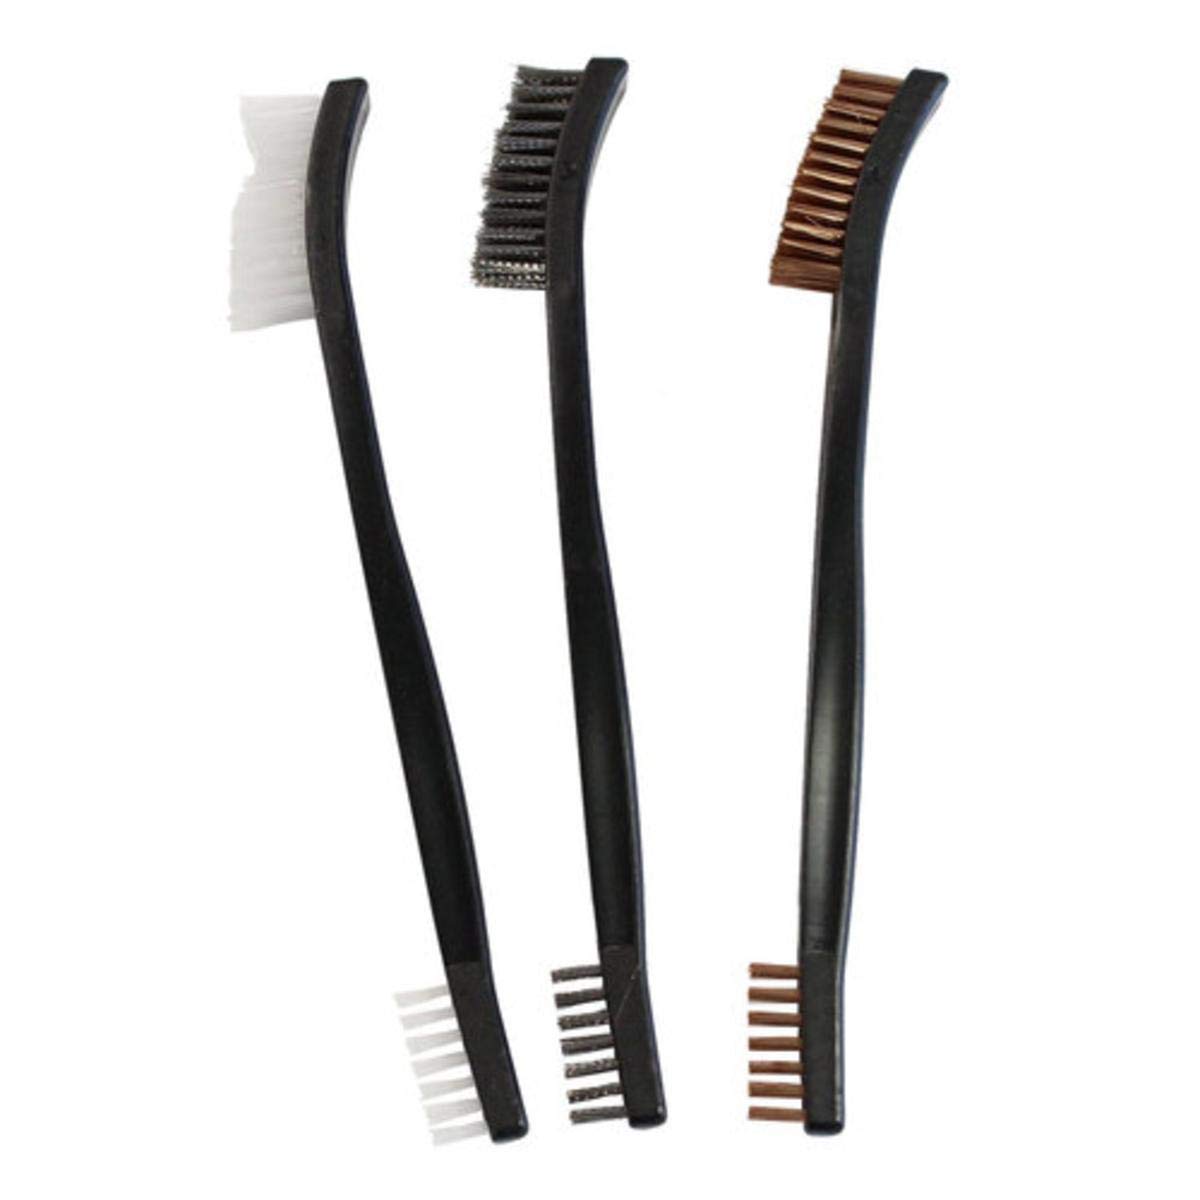 Birchwood Casey Utility Brushes - Bronze, Nylon & Stainless Brushes 3 Pack (Replaces 41103)